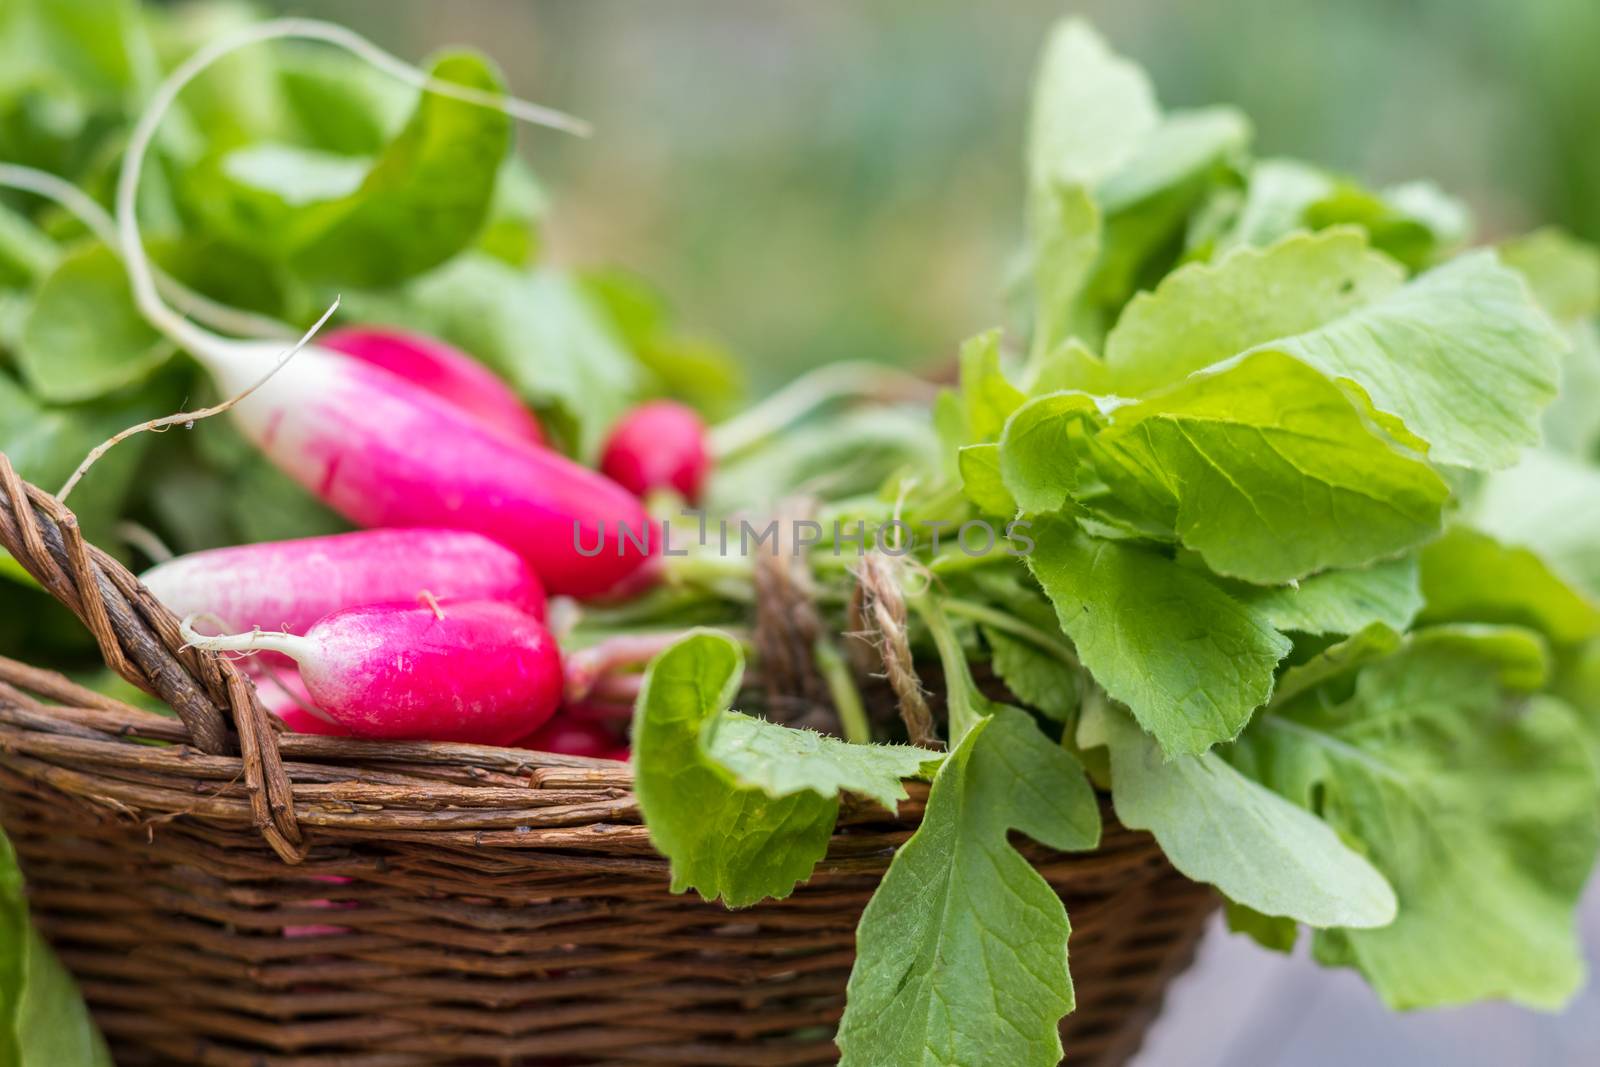 Bunch of radishes in a wicker basket by ArtSvitlyna